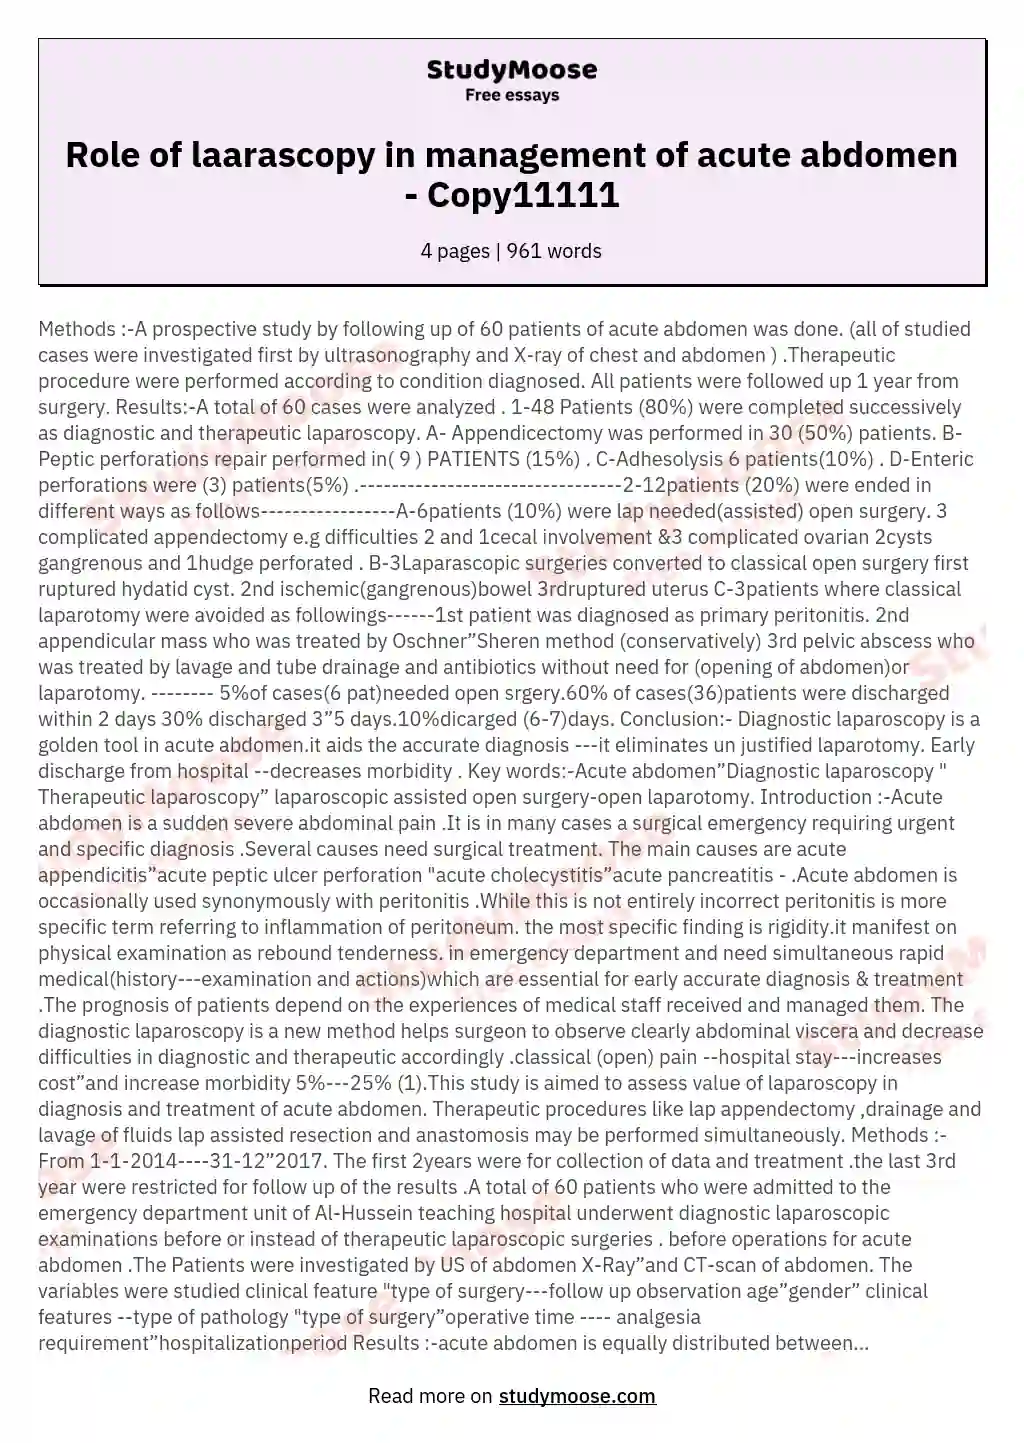 Role of laarascopy in management of acute abdomen - Copy11111 essay